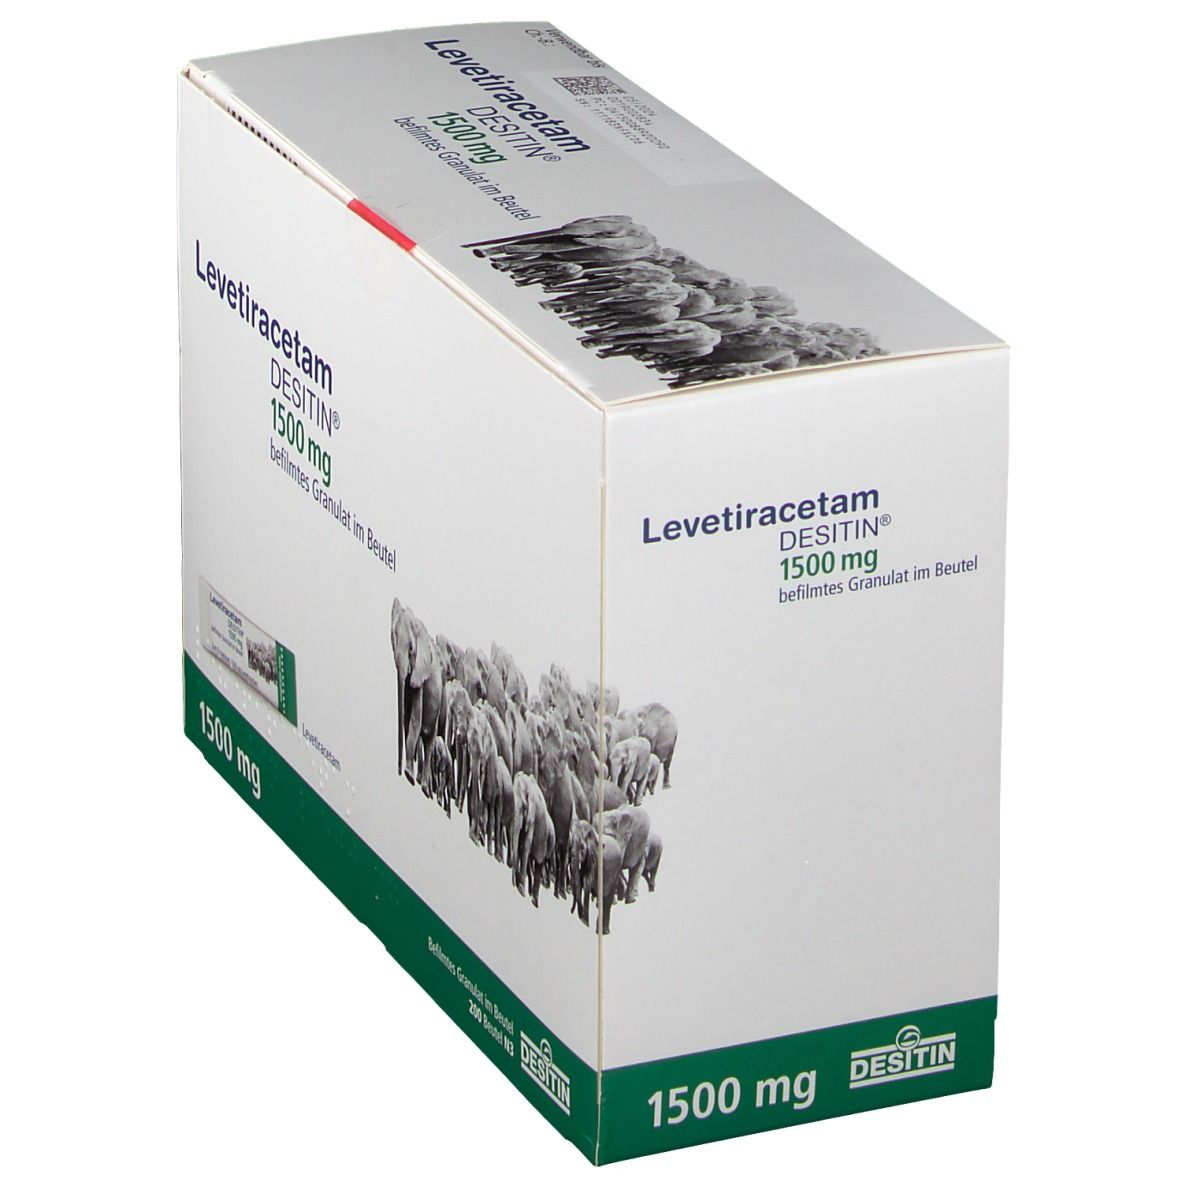 Levetiracetam DESITIN® 1500 mg